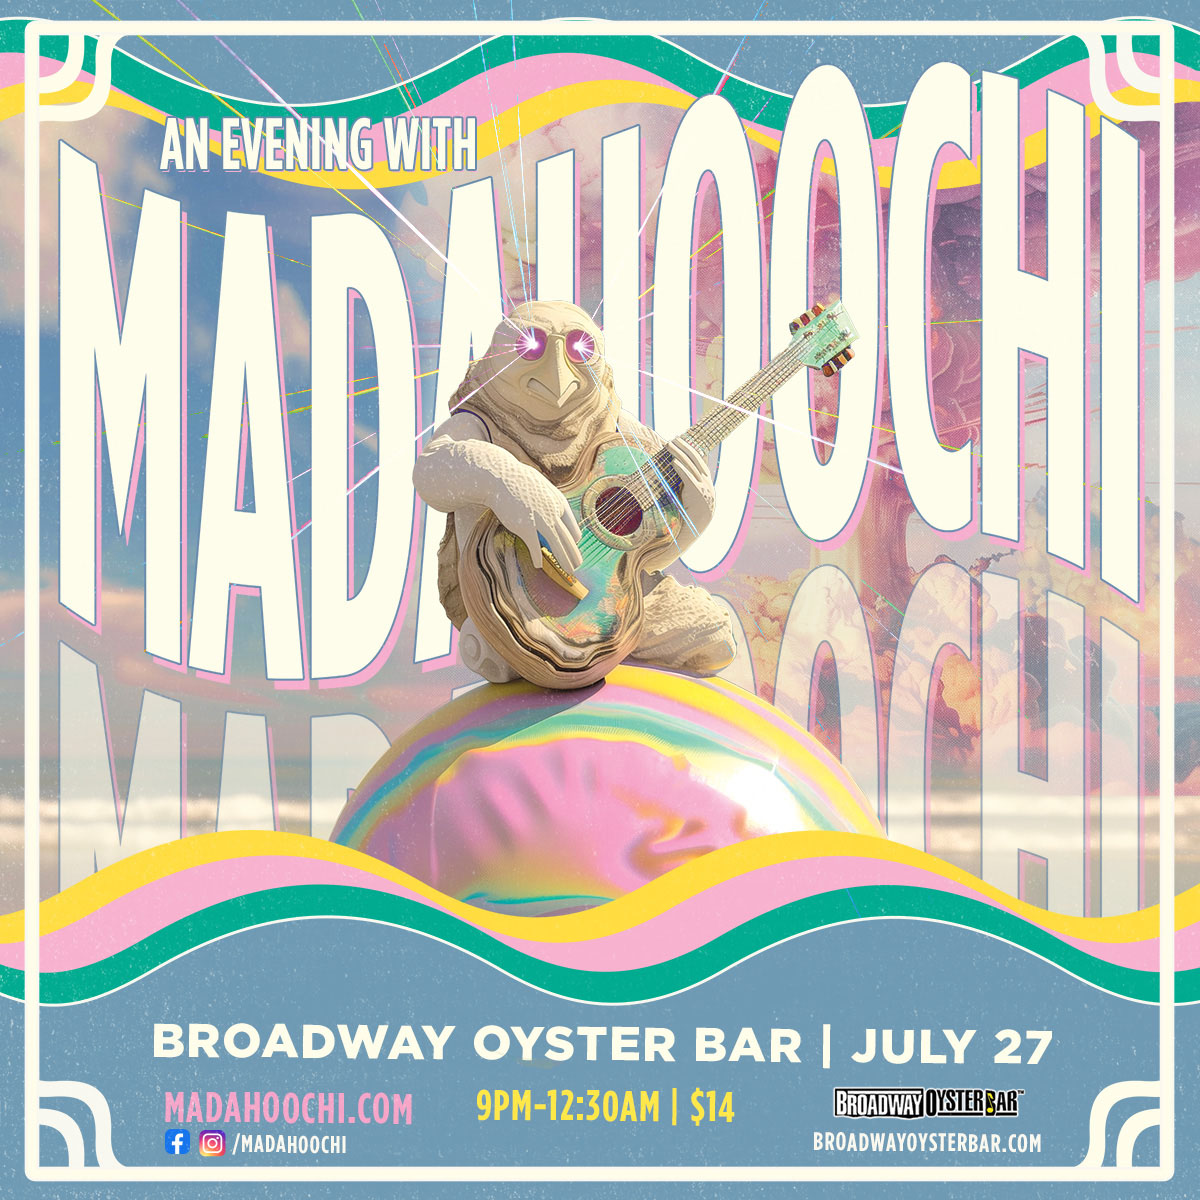 Broadway-Oyster-Bar Madahoochi  image